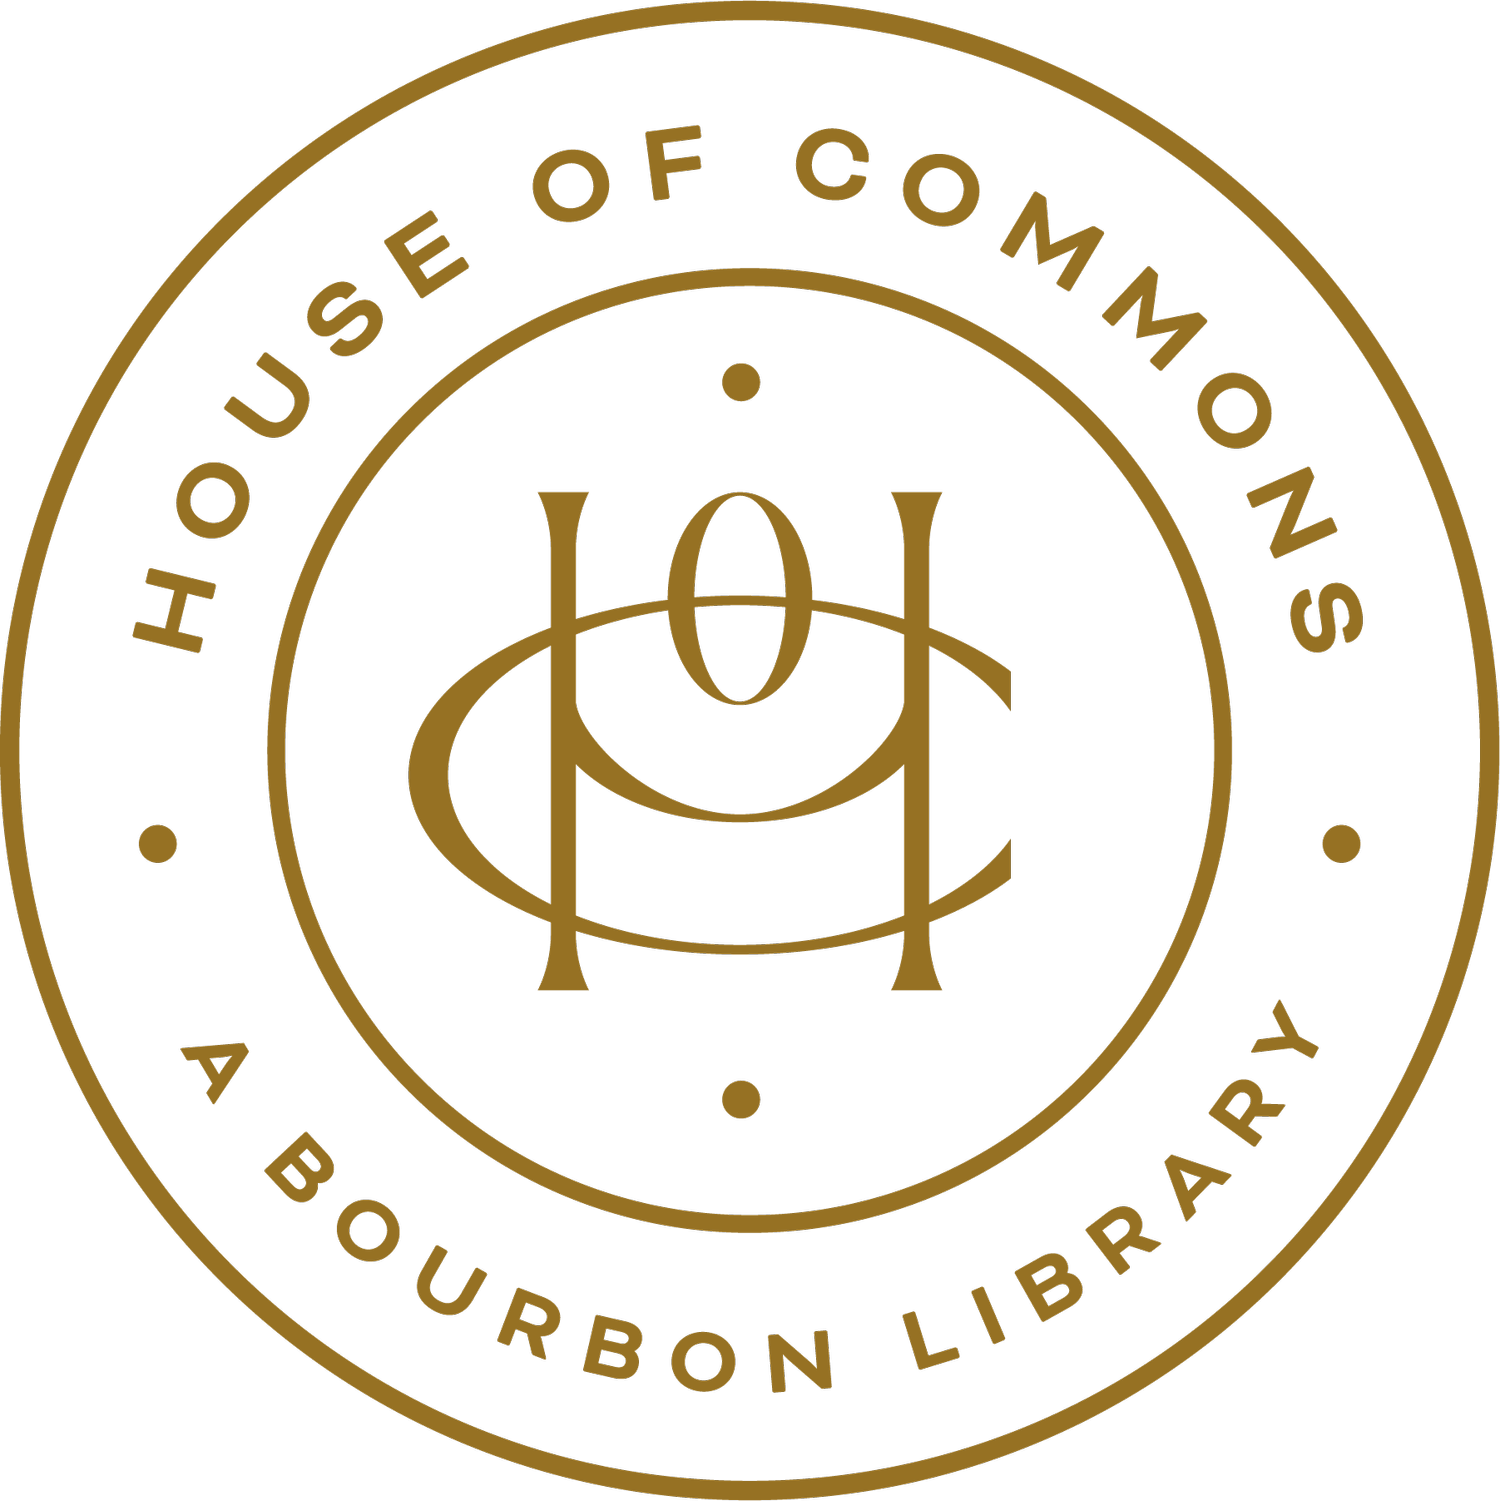 HOC: A Bourbon Library